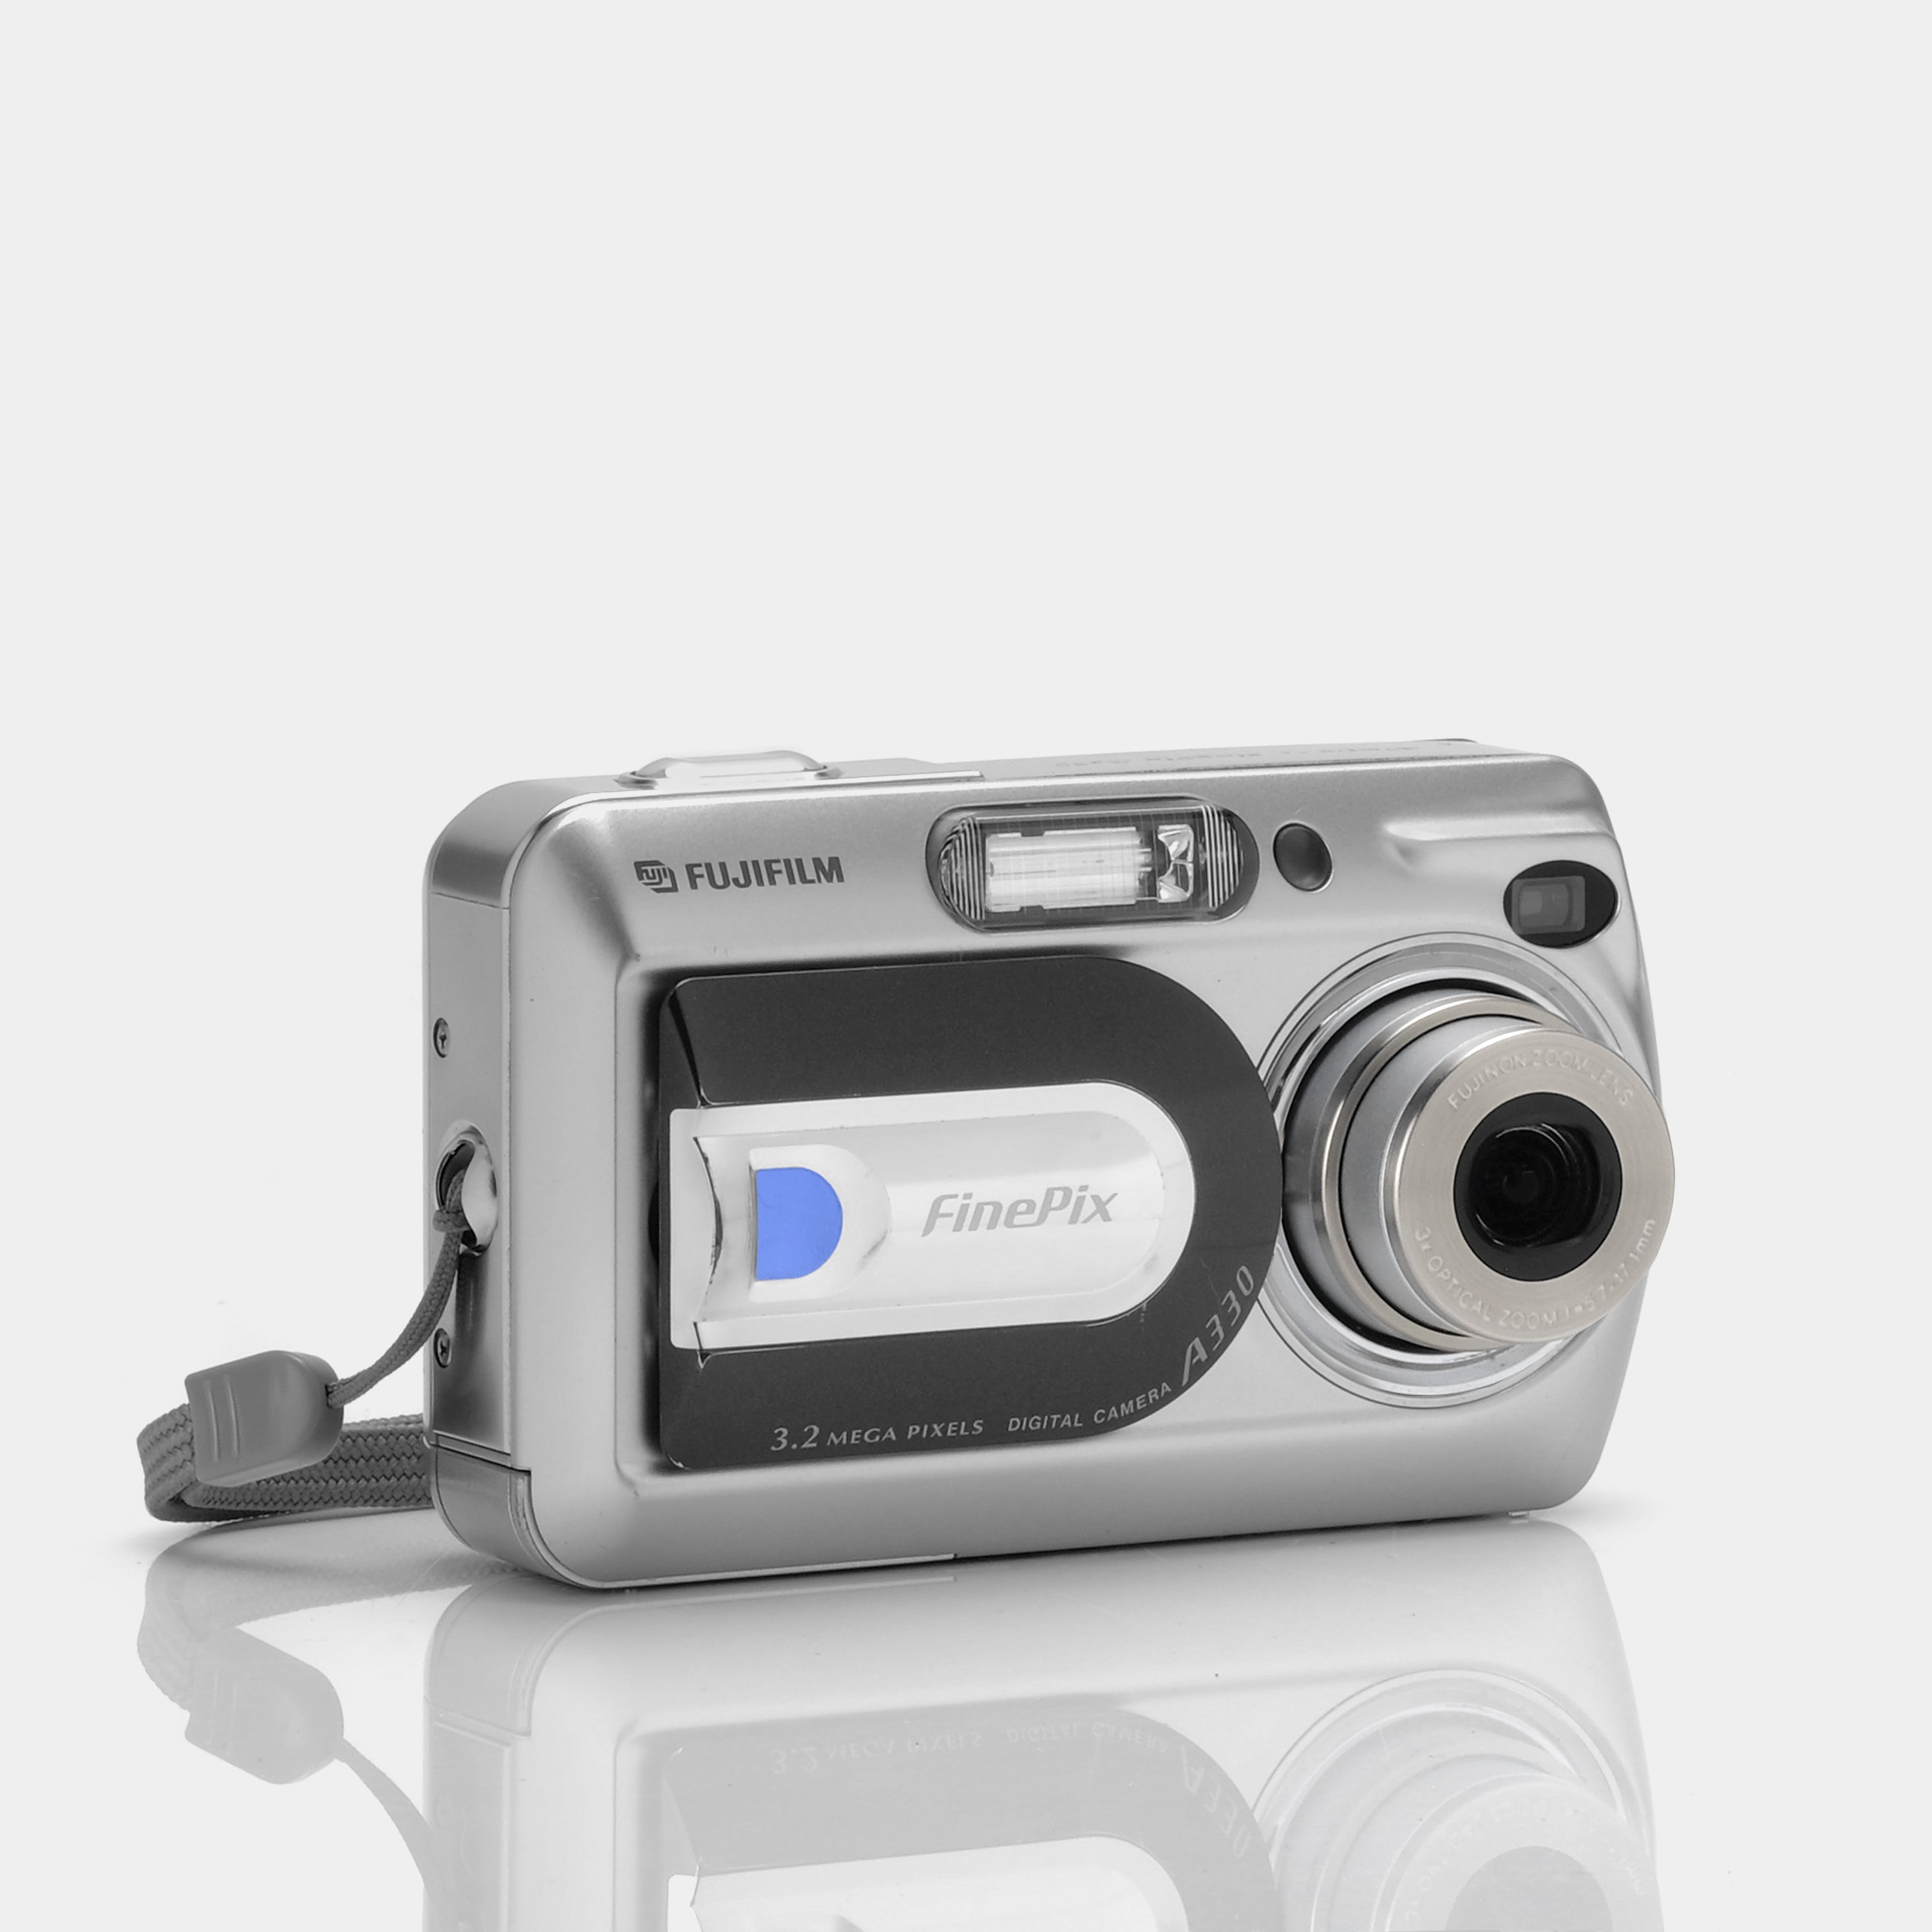 Fujifilm FinePix A330 Point and Shoot Digital Camera